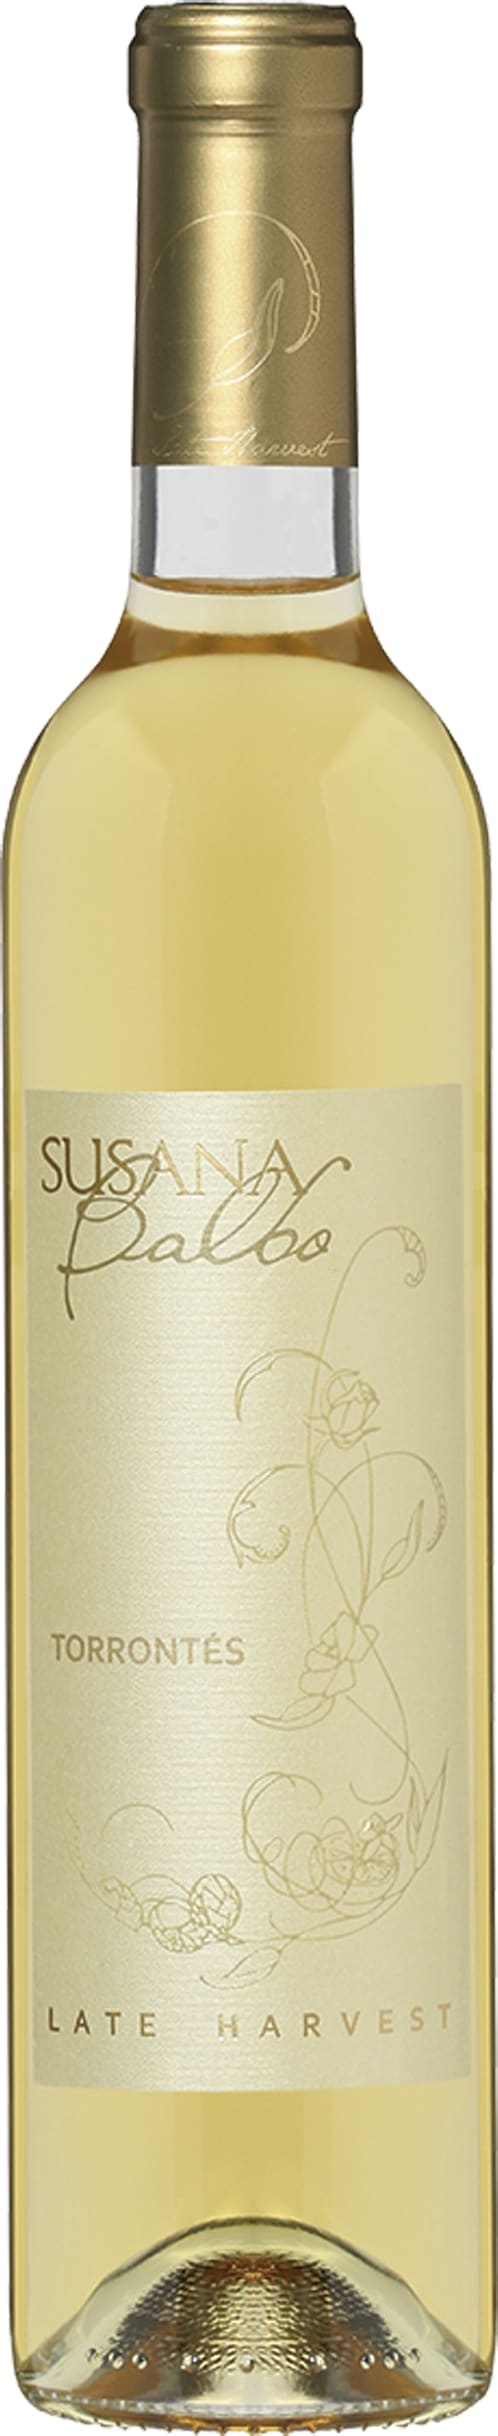 Sig Late Harvest Torrontes 21 Susana Balbo 6x75cl - Just Wines 